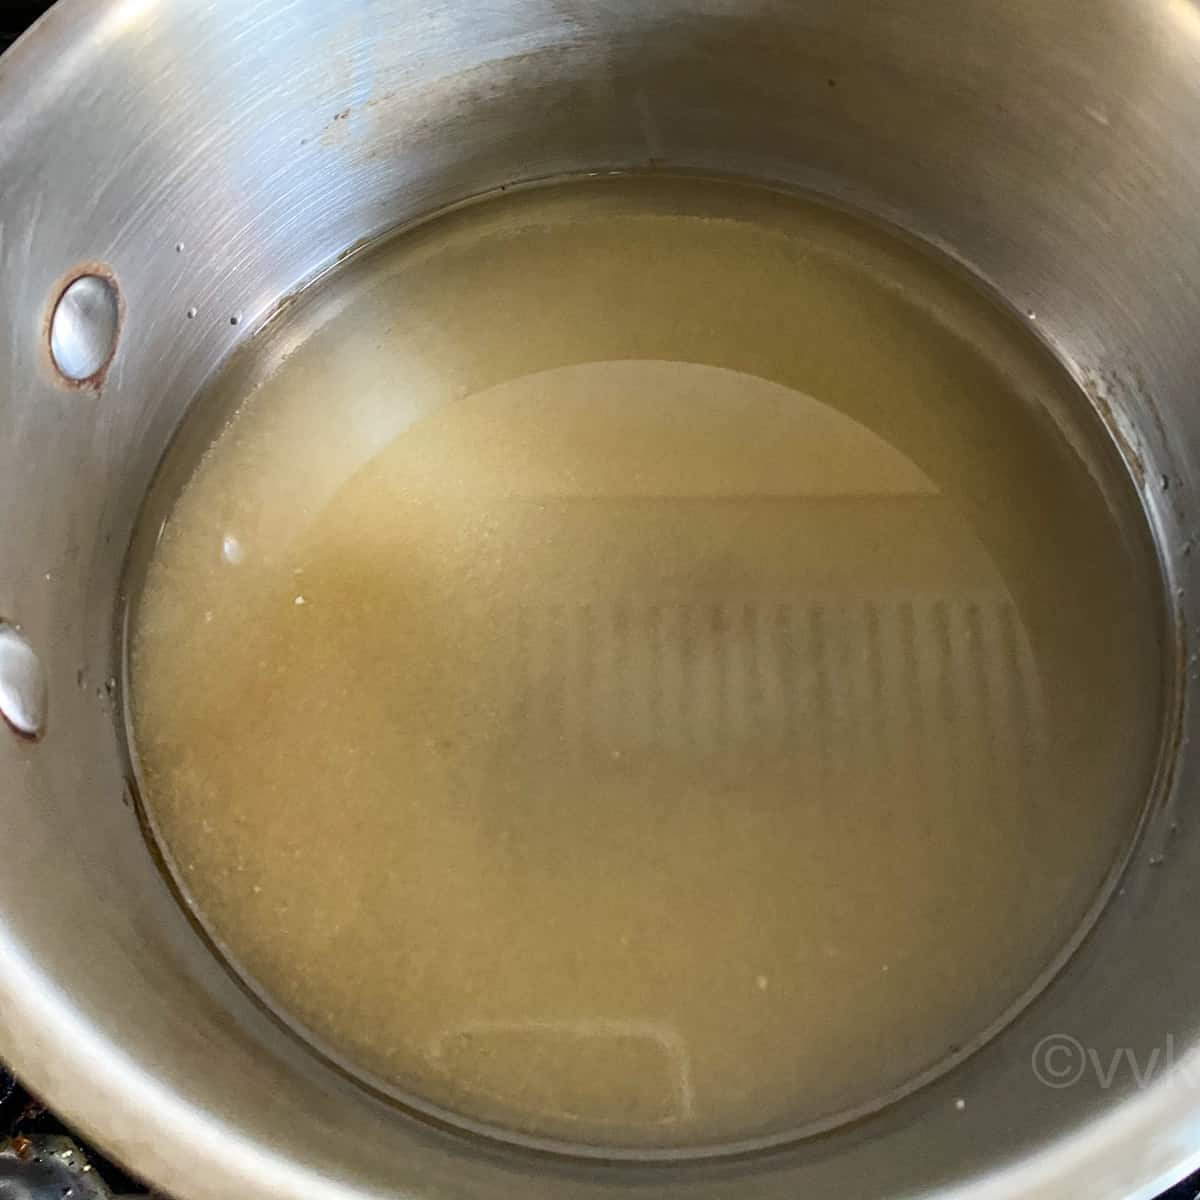 simmering sugar and water in a saucepan